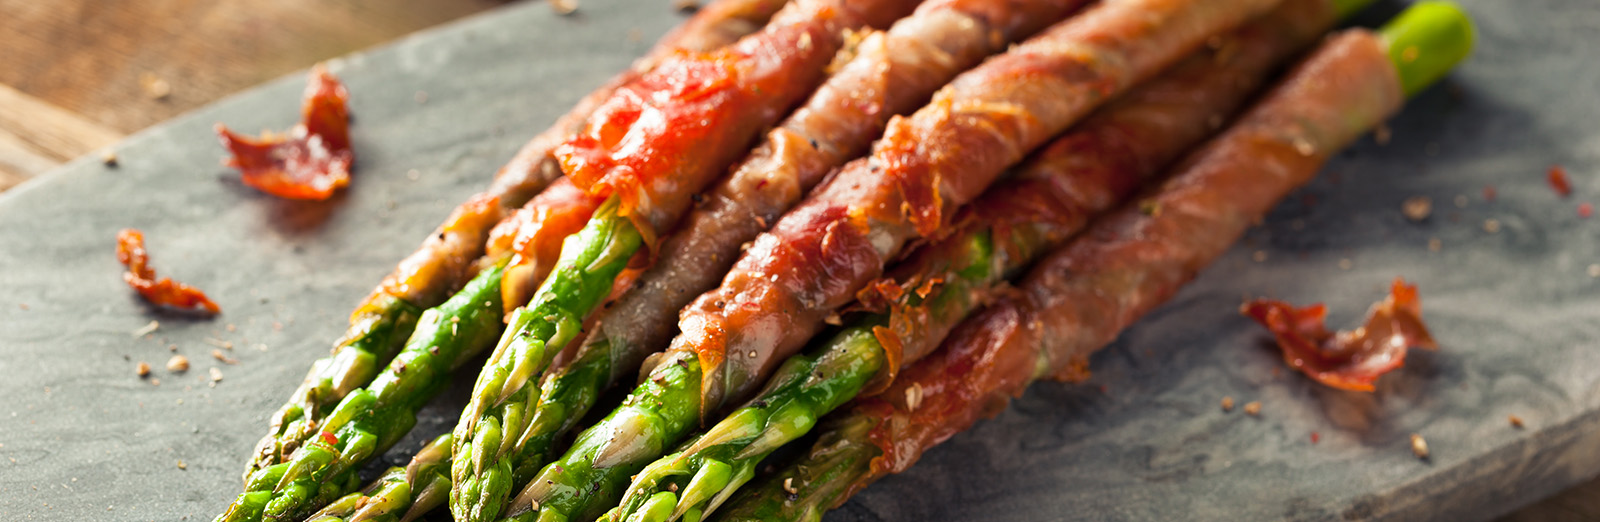 Prosciutto-wrapped asparagus - hero image.jpg